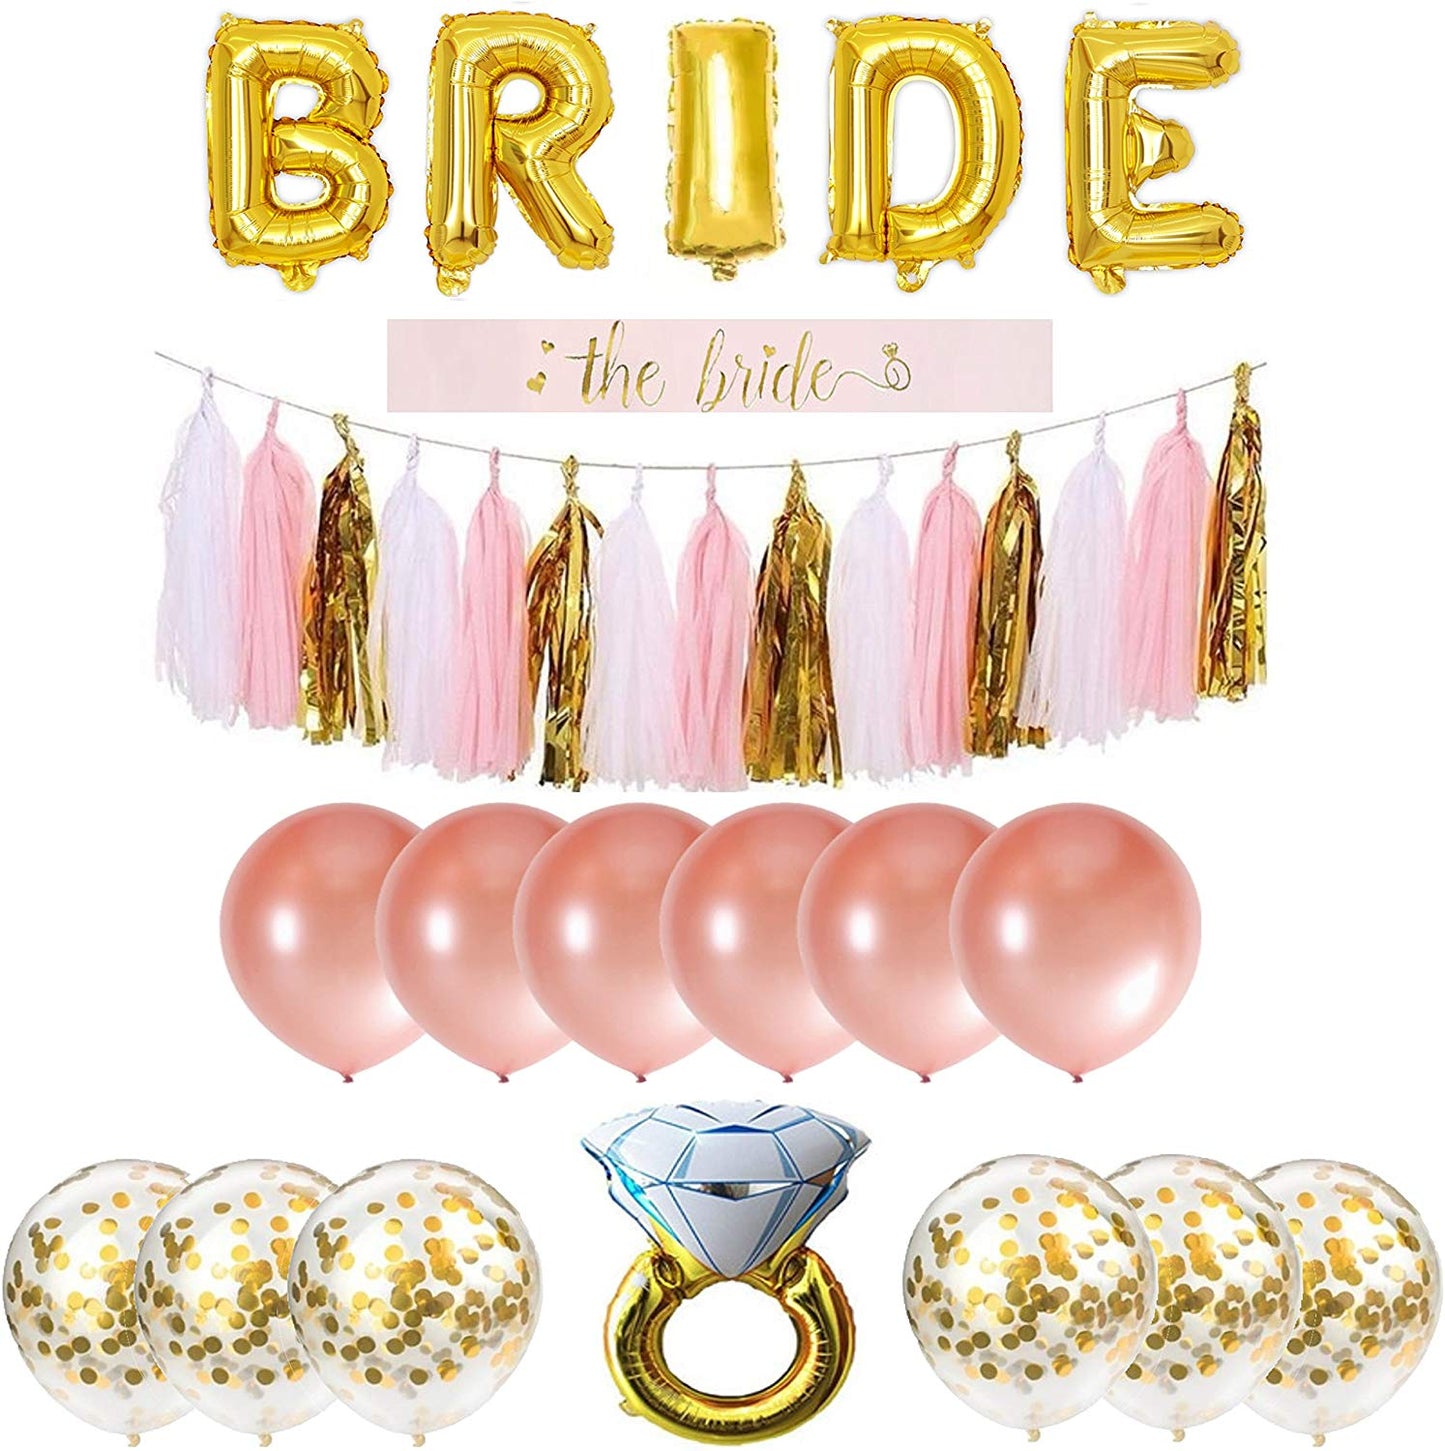 Rose Gold & Gold Bride Decoration Kit - 20 pieces!